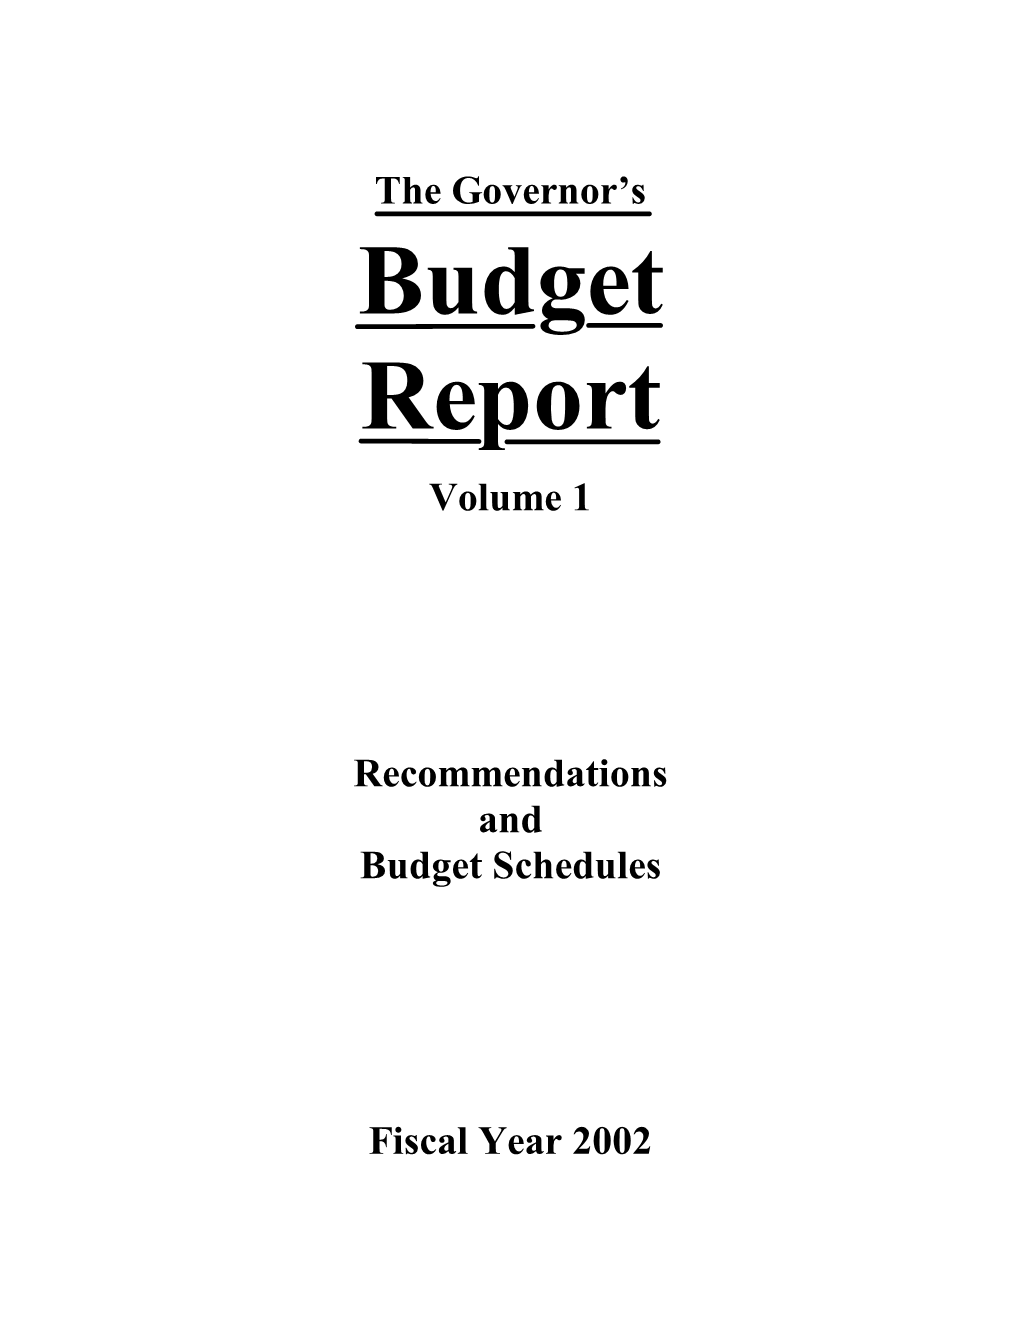 Budget Narrative & Schedules